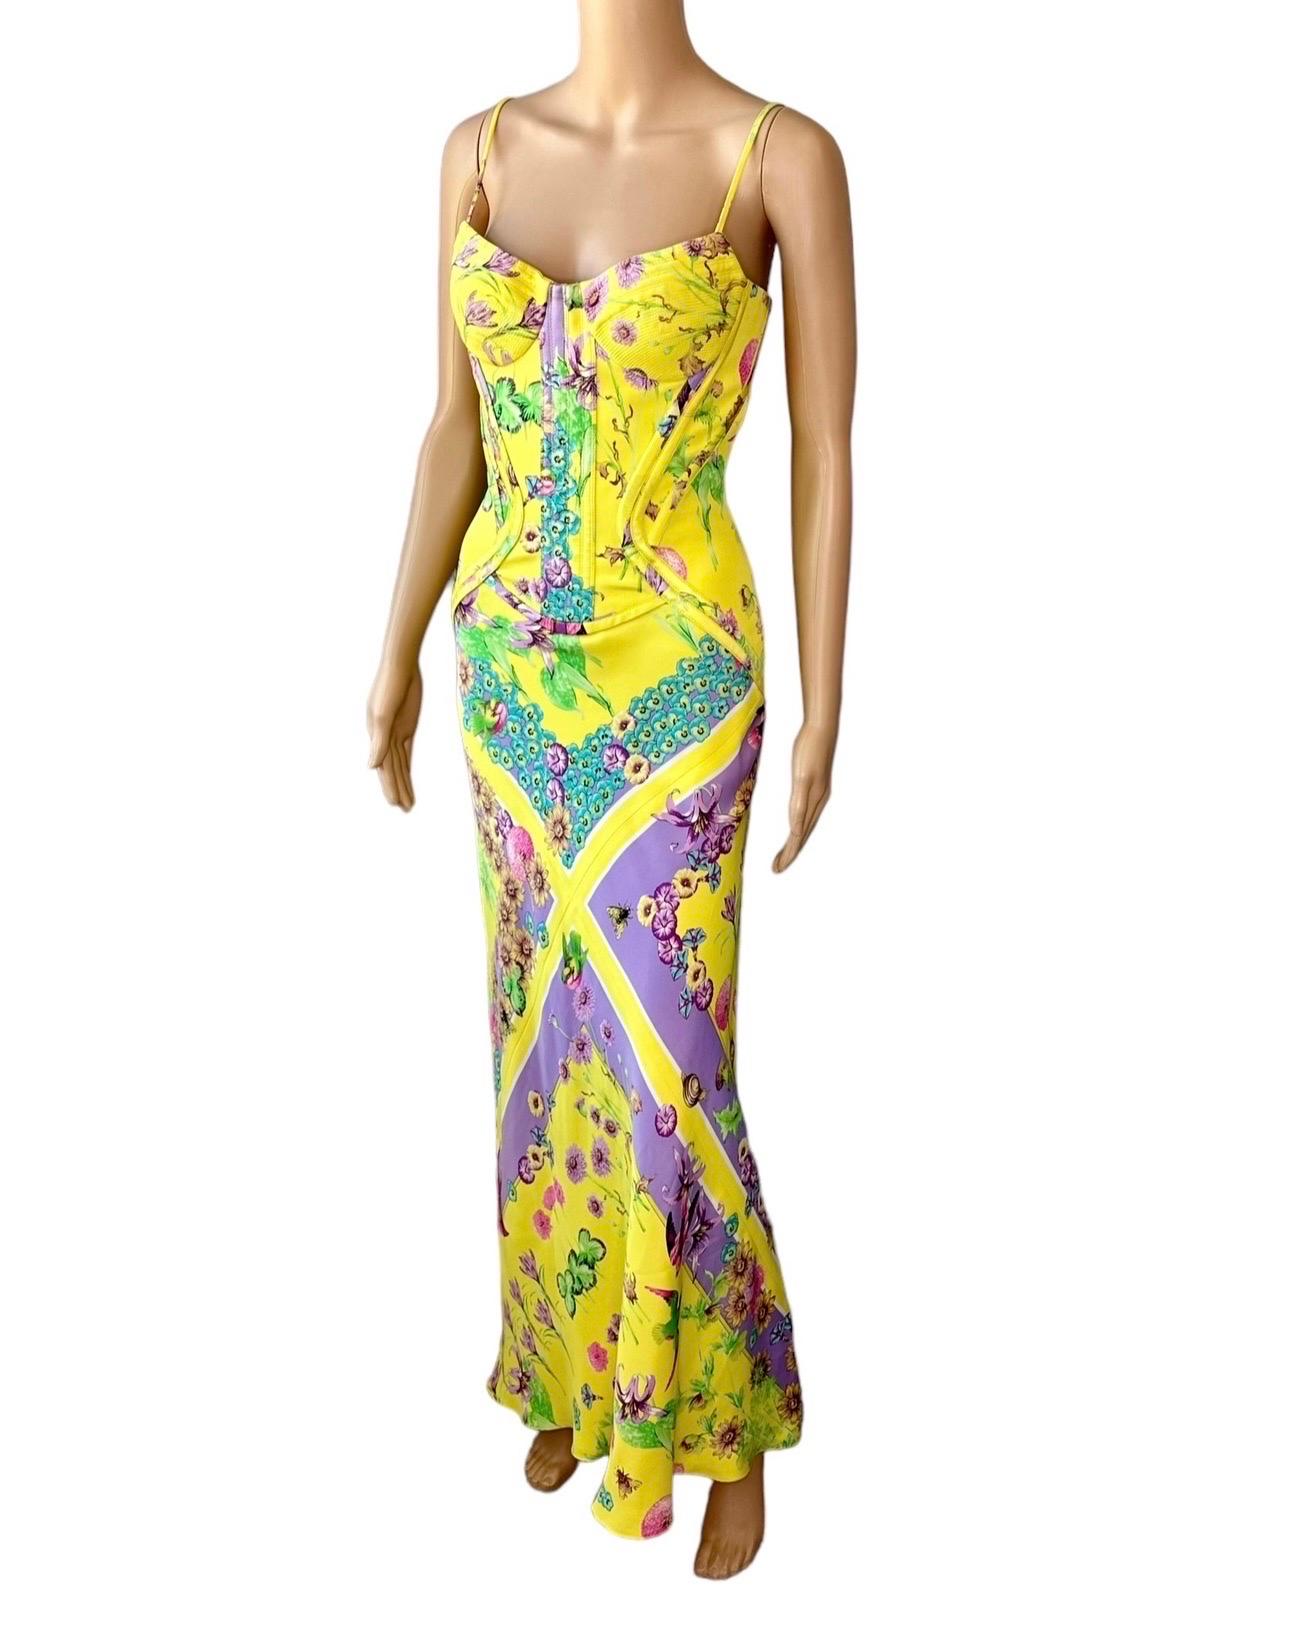 Versace S/S 2006 Bustier Corset Floral Print Evening Dress Gown For Sale 1